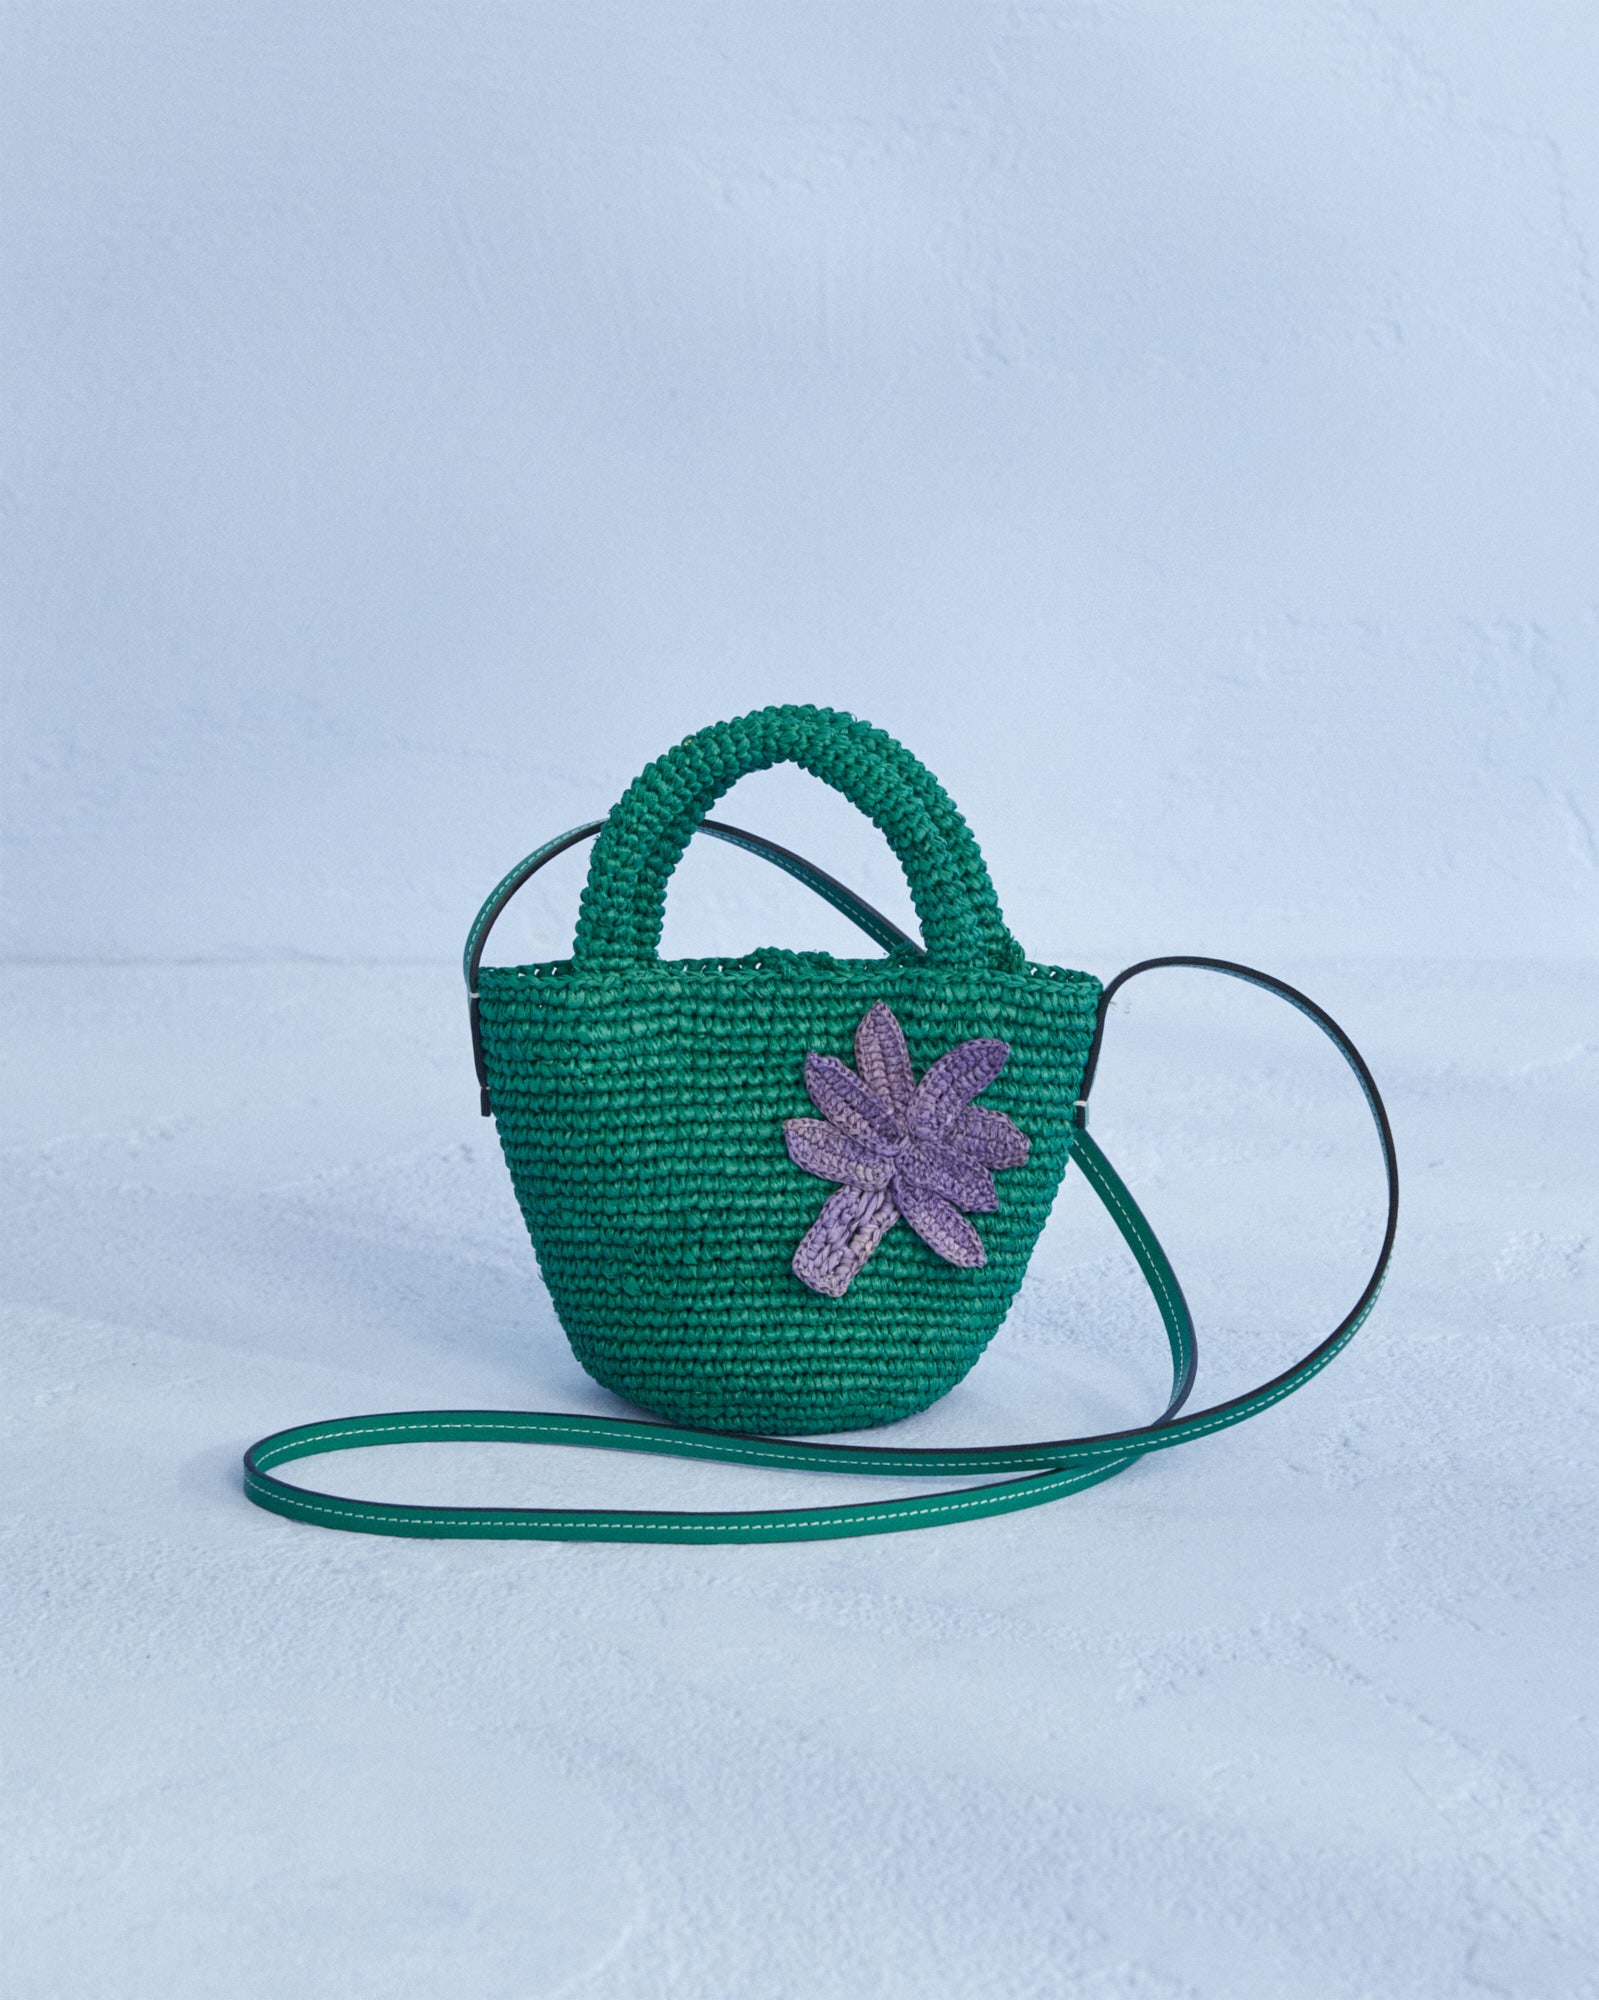 Raffia & Leather Summer Bag Mini - Cross-body Bag - Vitamin Green with Palm